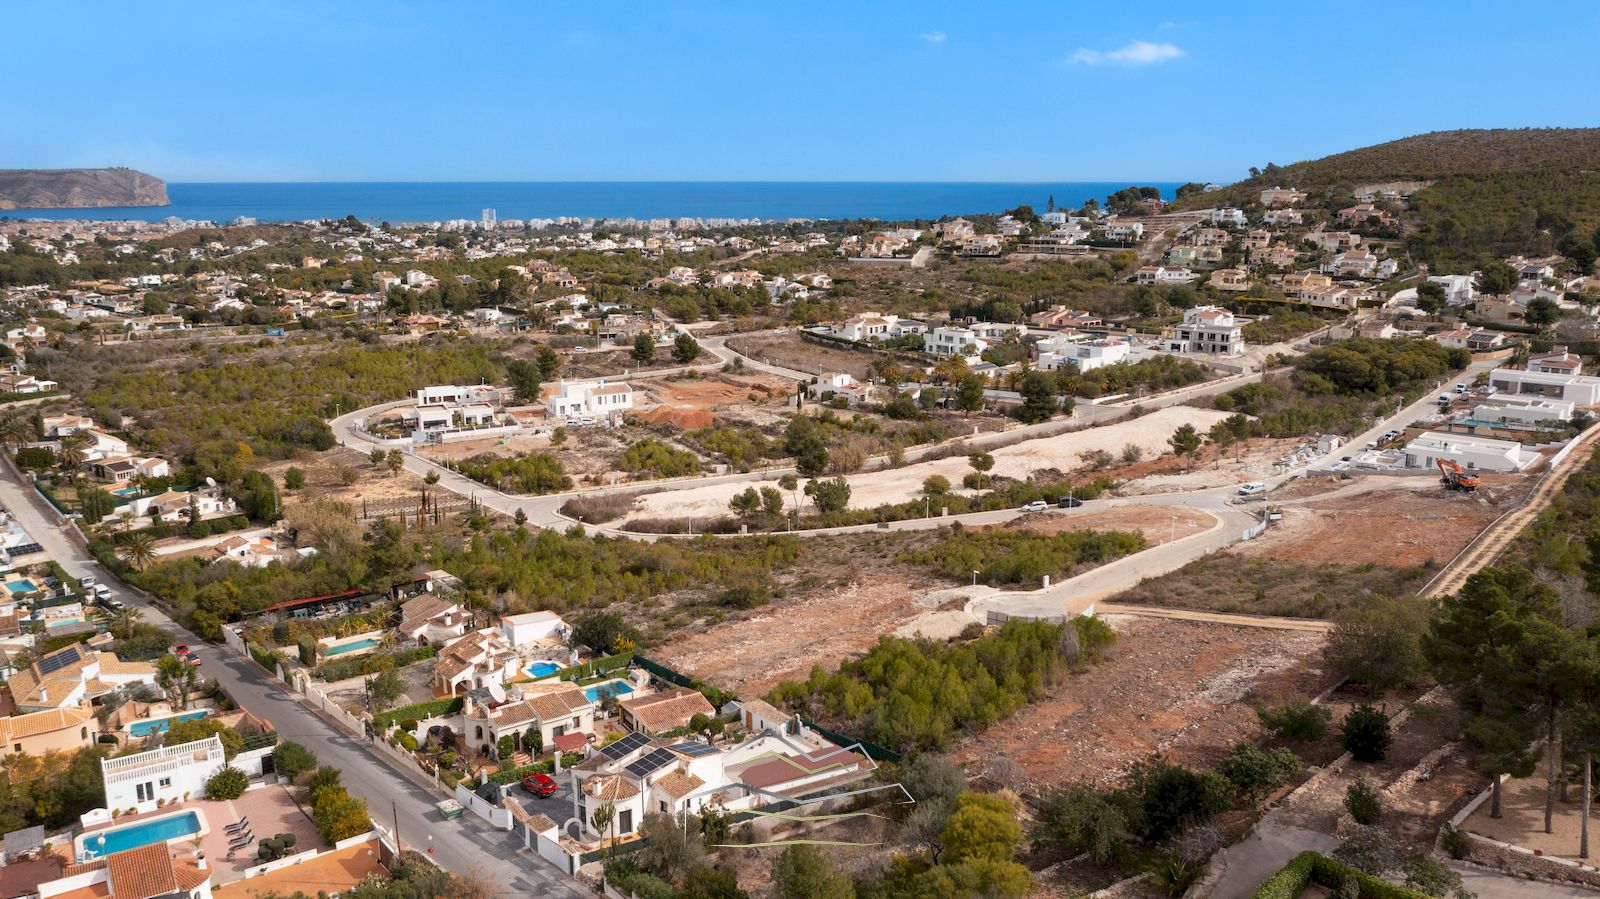 Ibizan style villa for sale in Javea